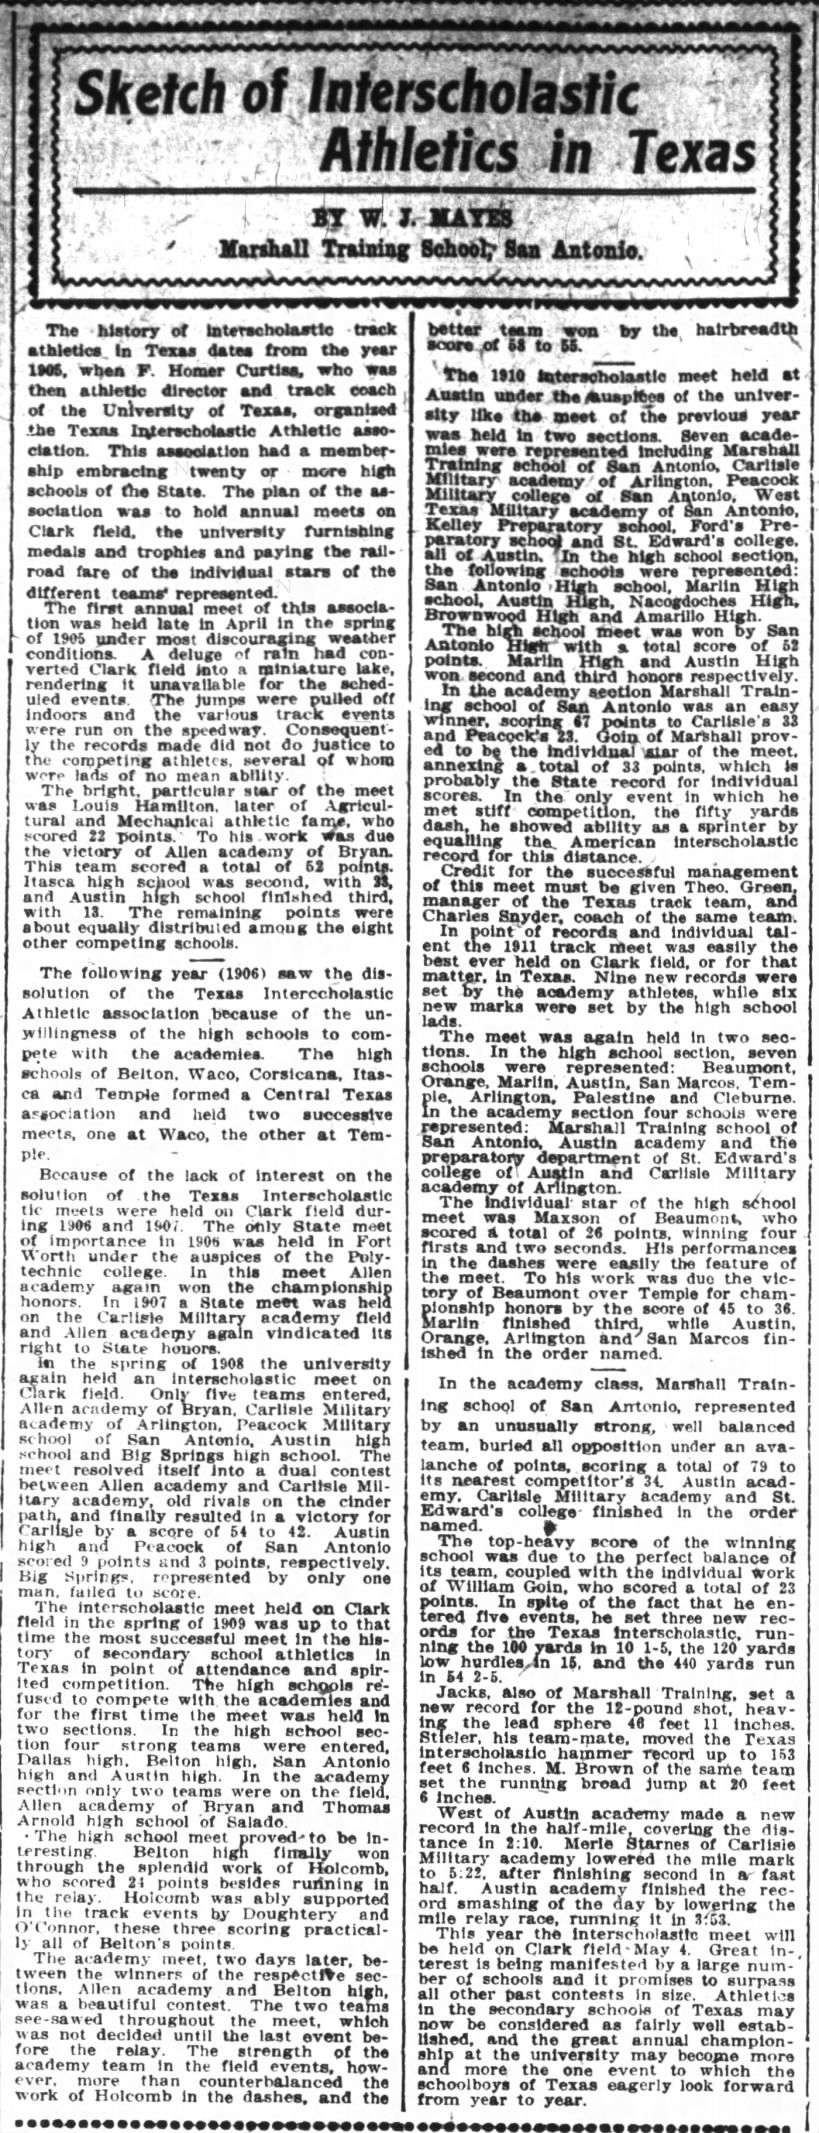 Huge recap of Texas Athletics 1905-1912ish